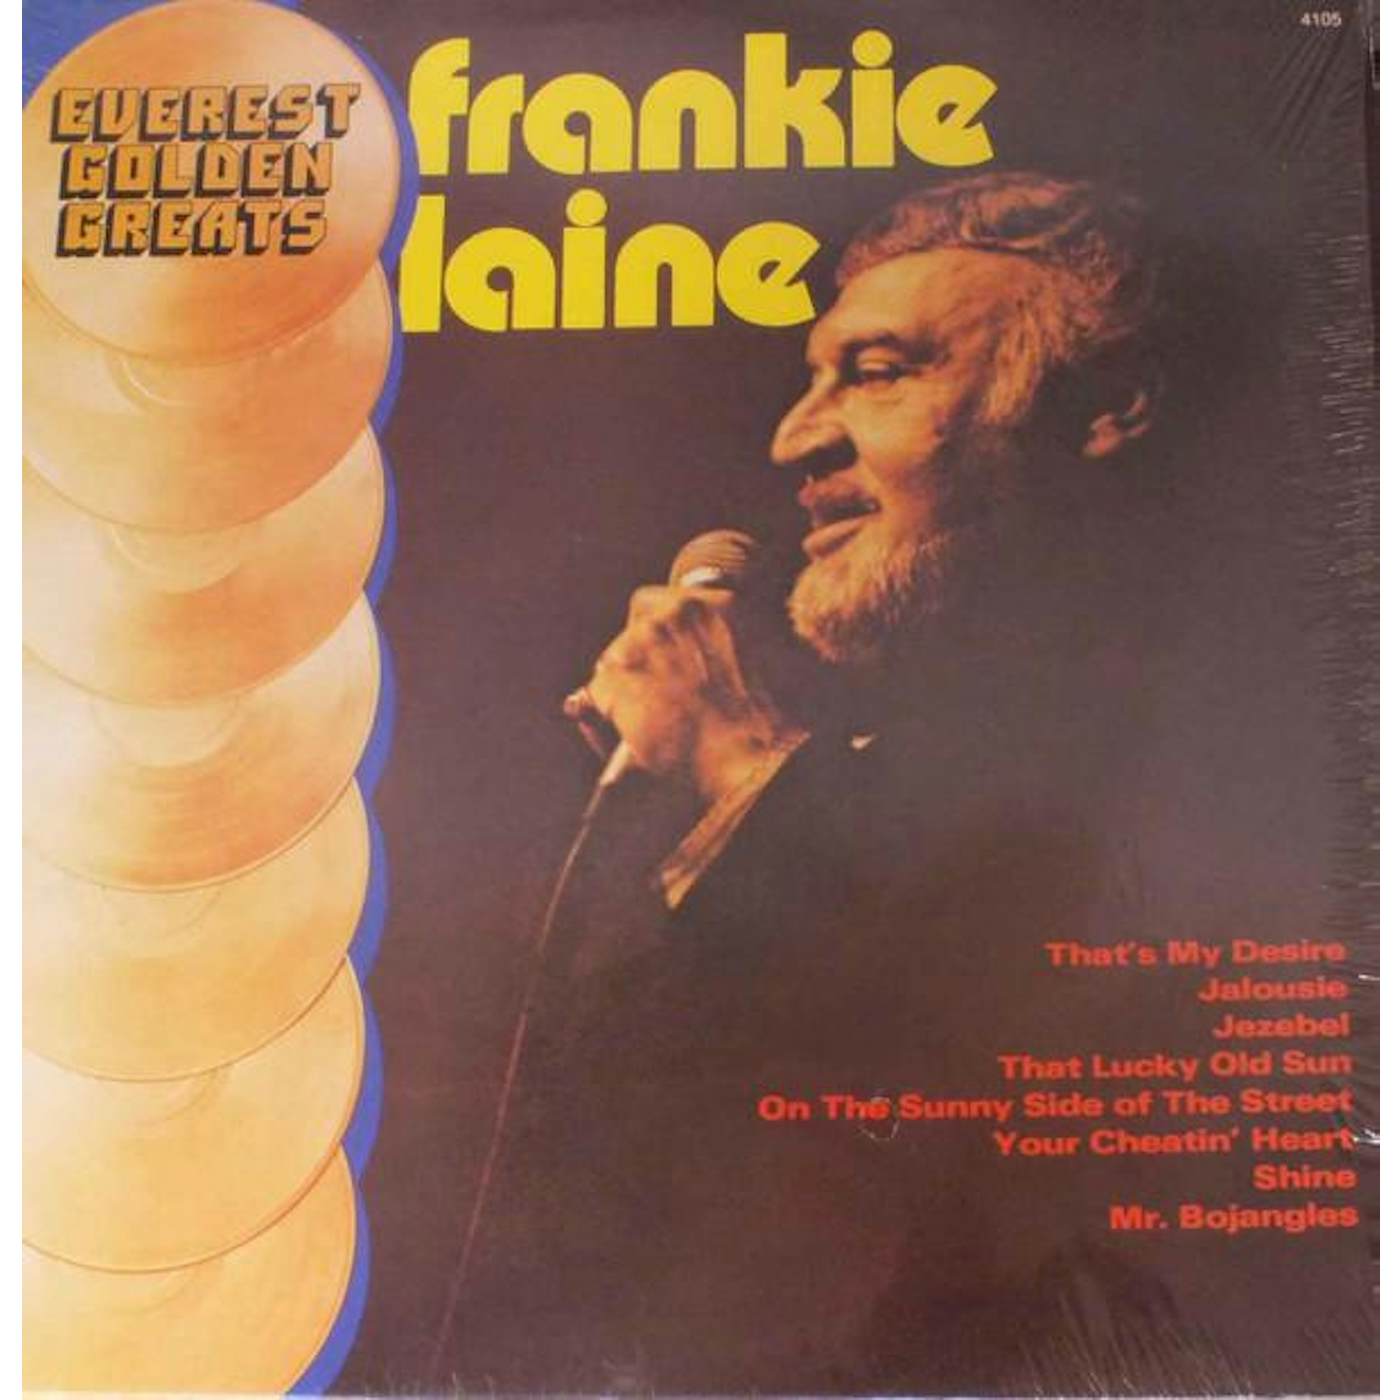 Frankie Laine GOLDEN GREATS CD